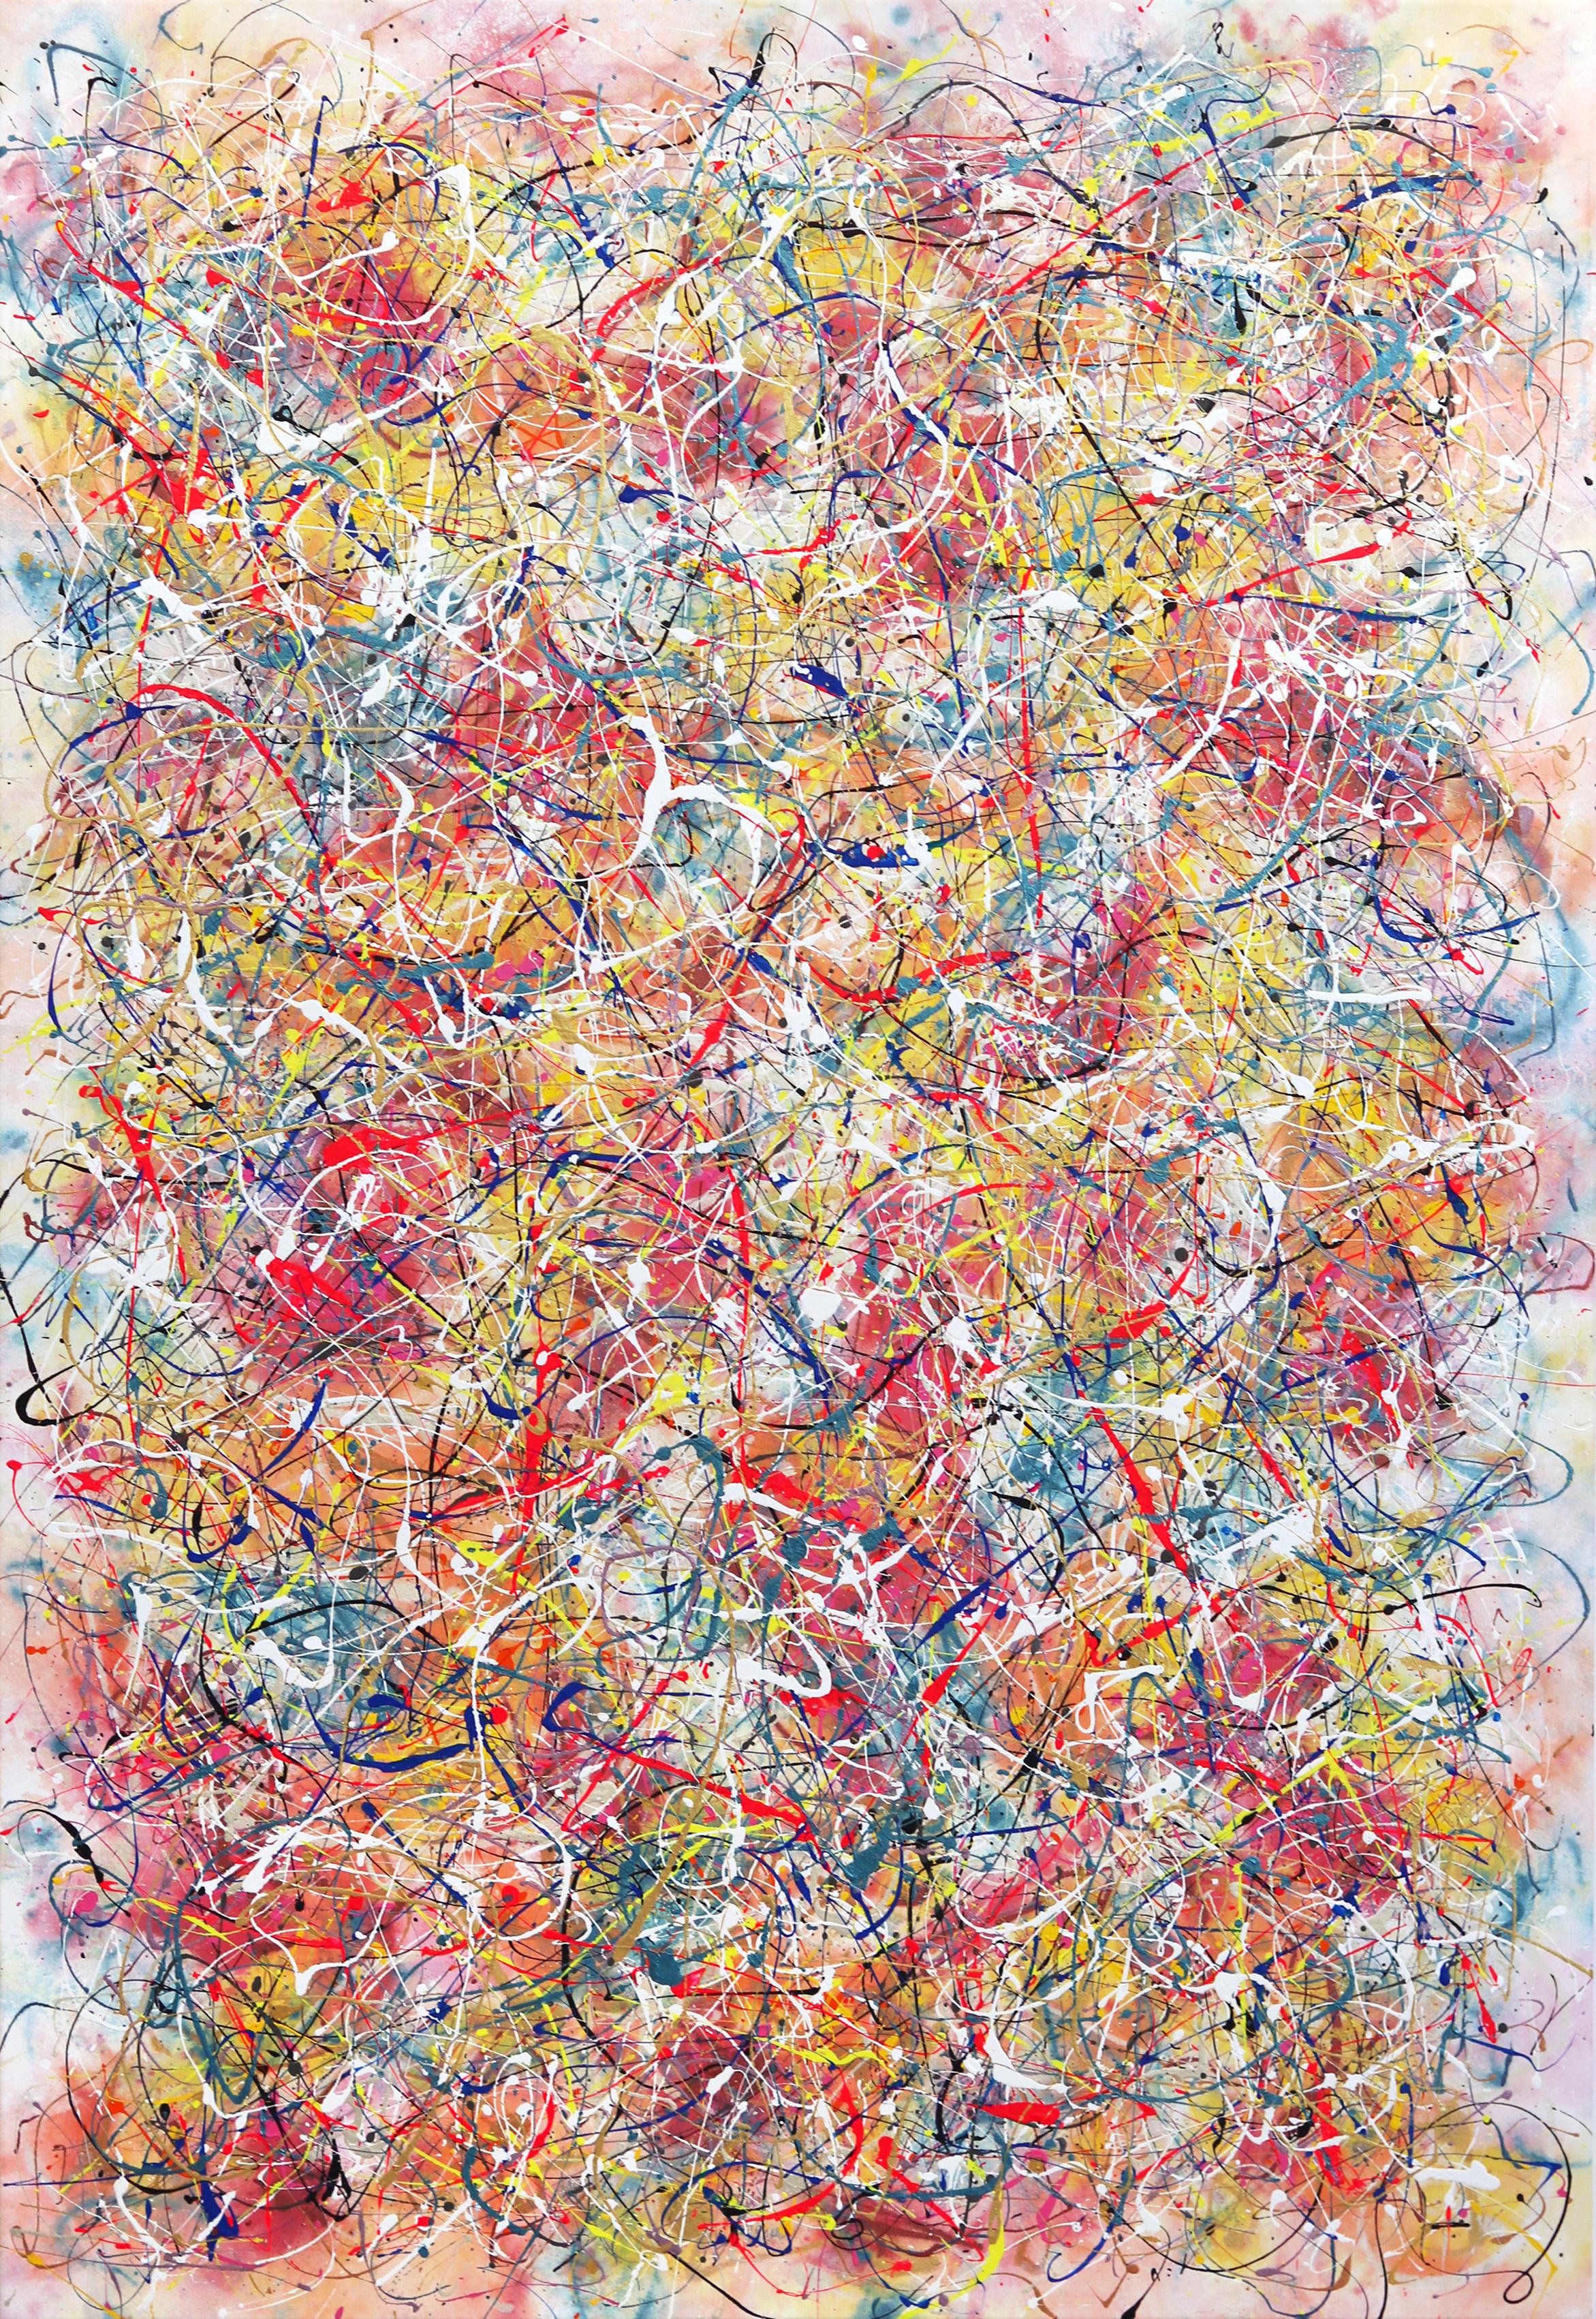 Joyful Noise - Large Colorful Unique Expressionist Action Painting - Mixed Media Art by Marc Raphael